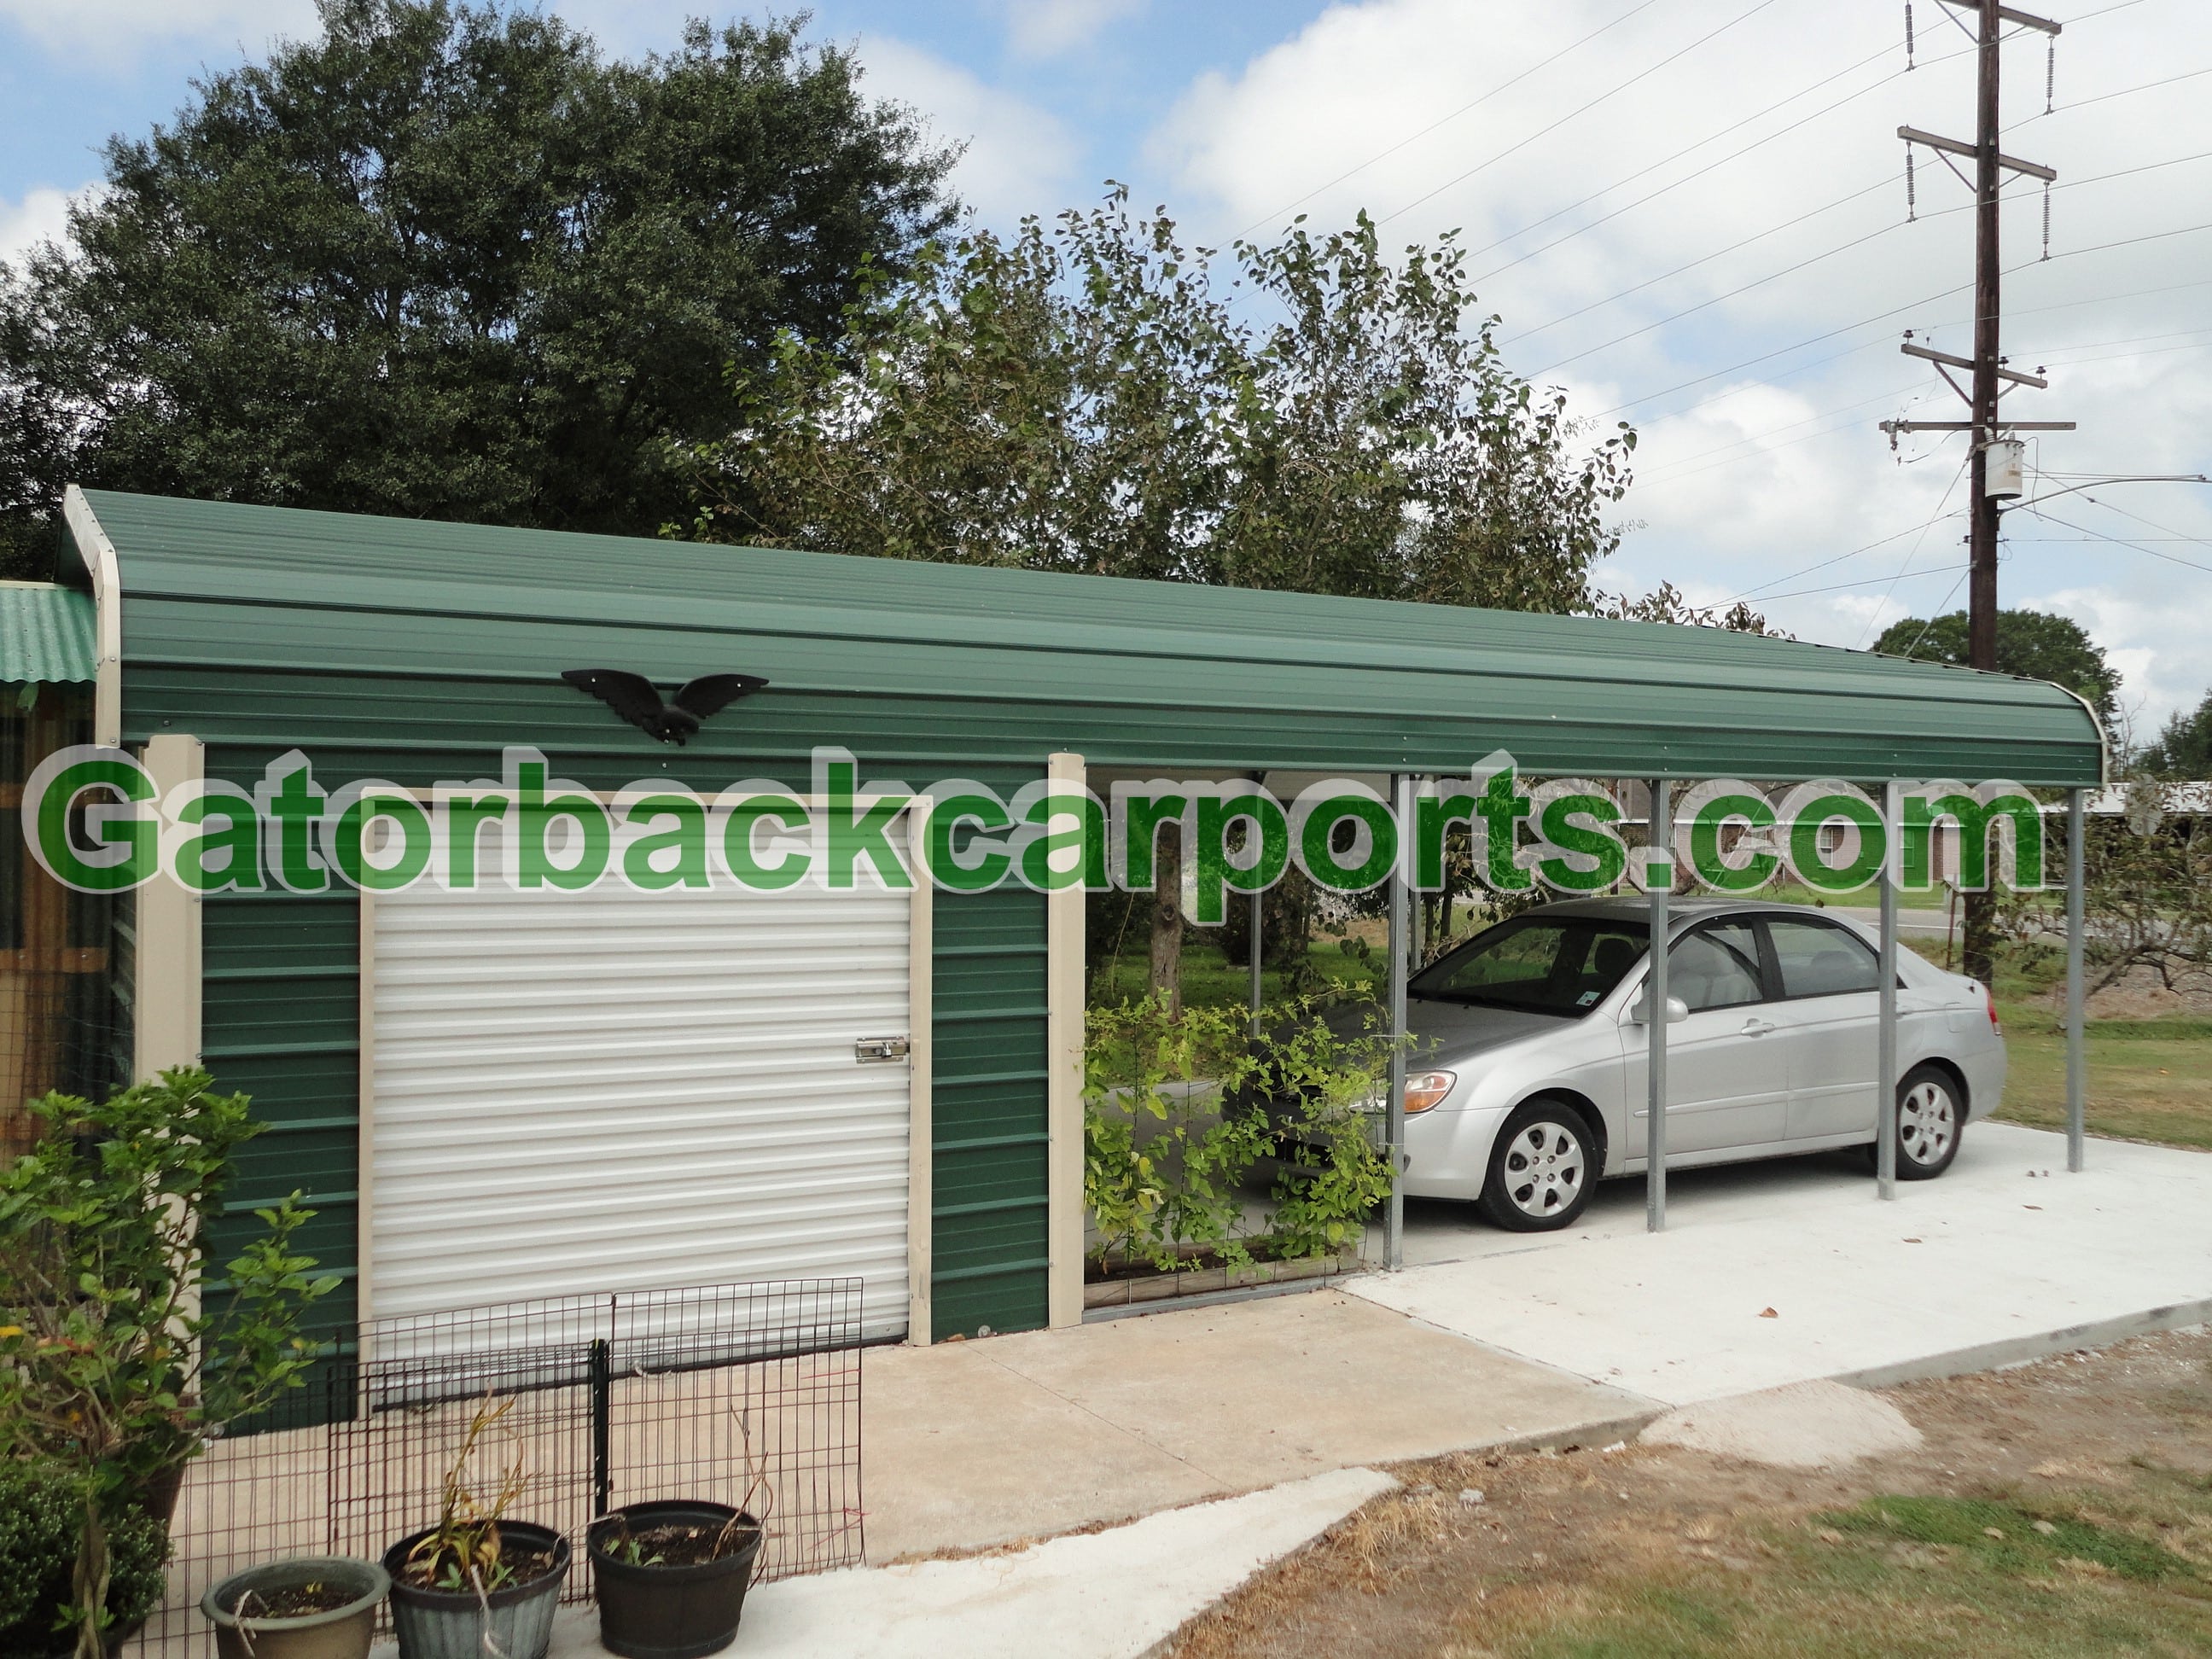 Carports Metal Garages For Sale In Baton Rouge La Gatorback Carports